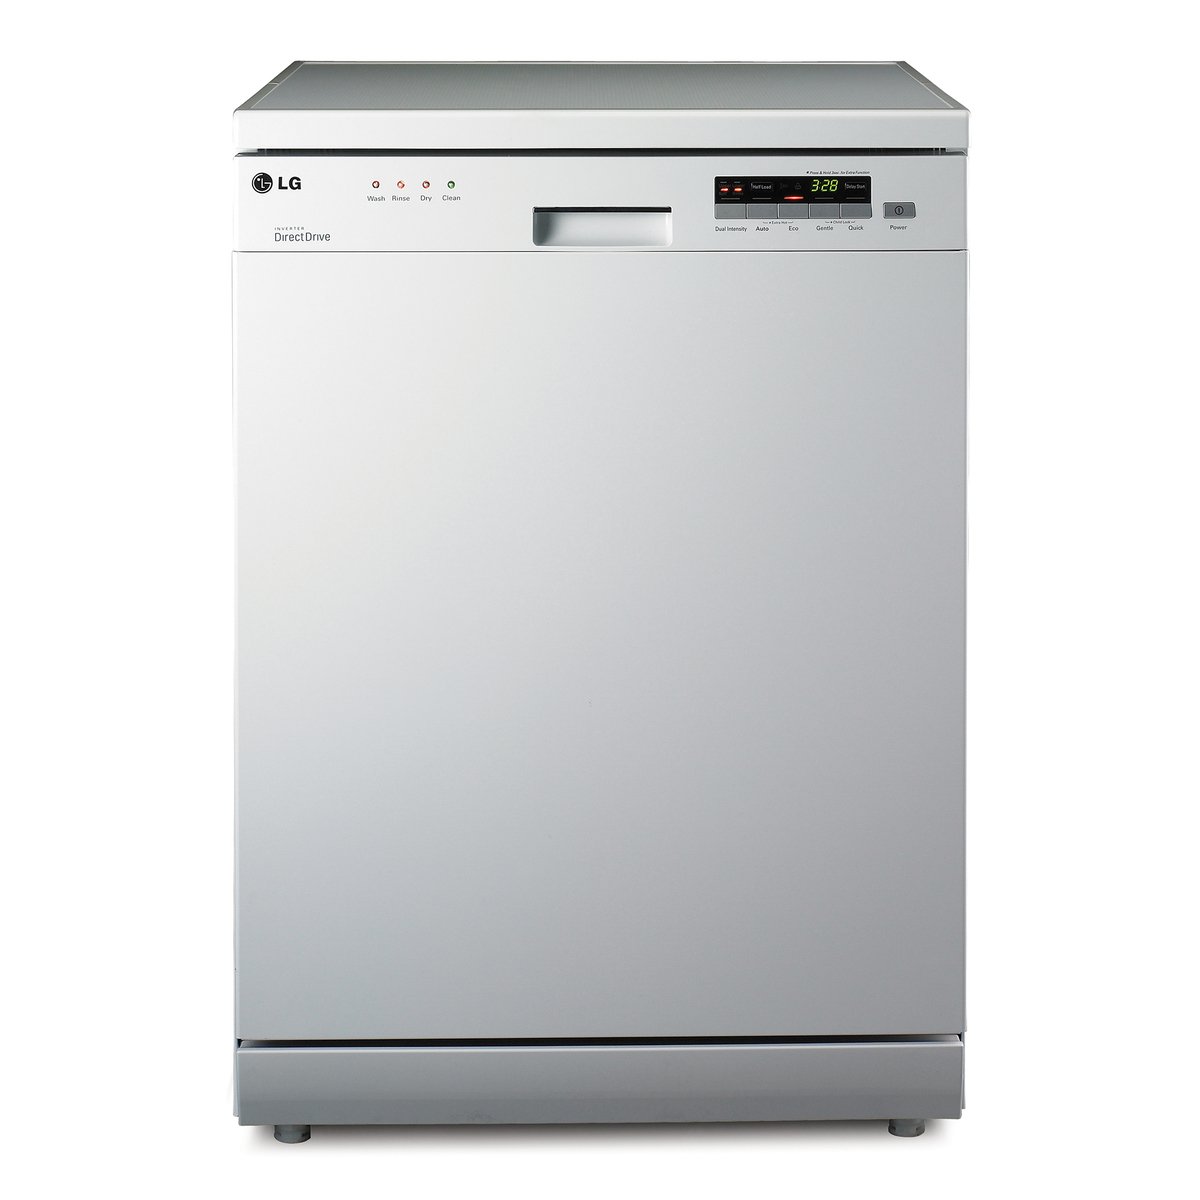 LG Dishwasher D1452WF 5 Programs